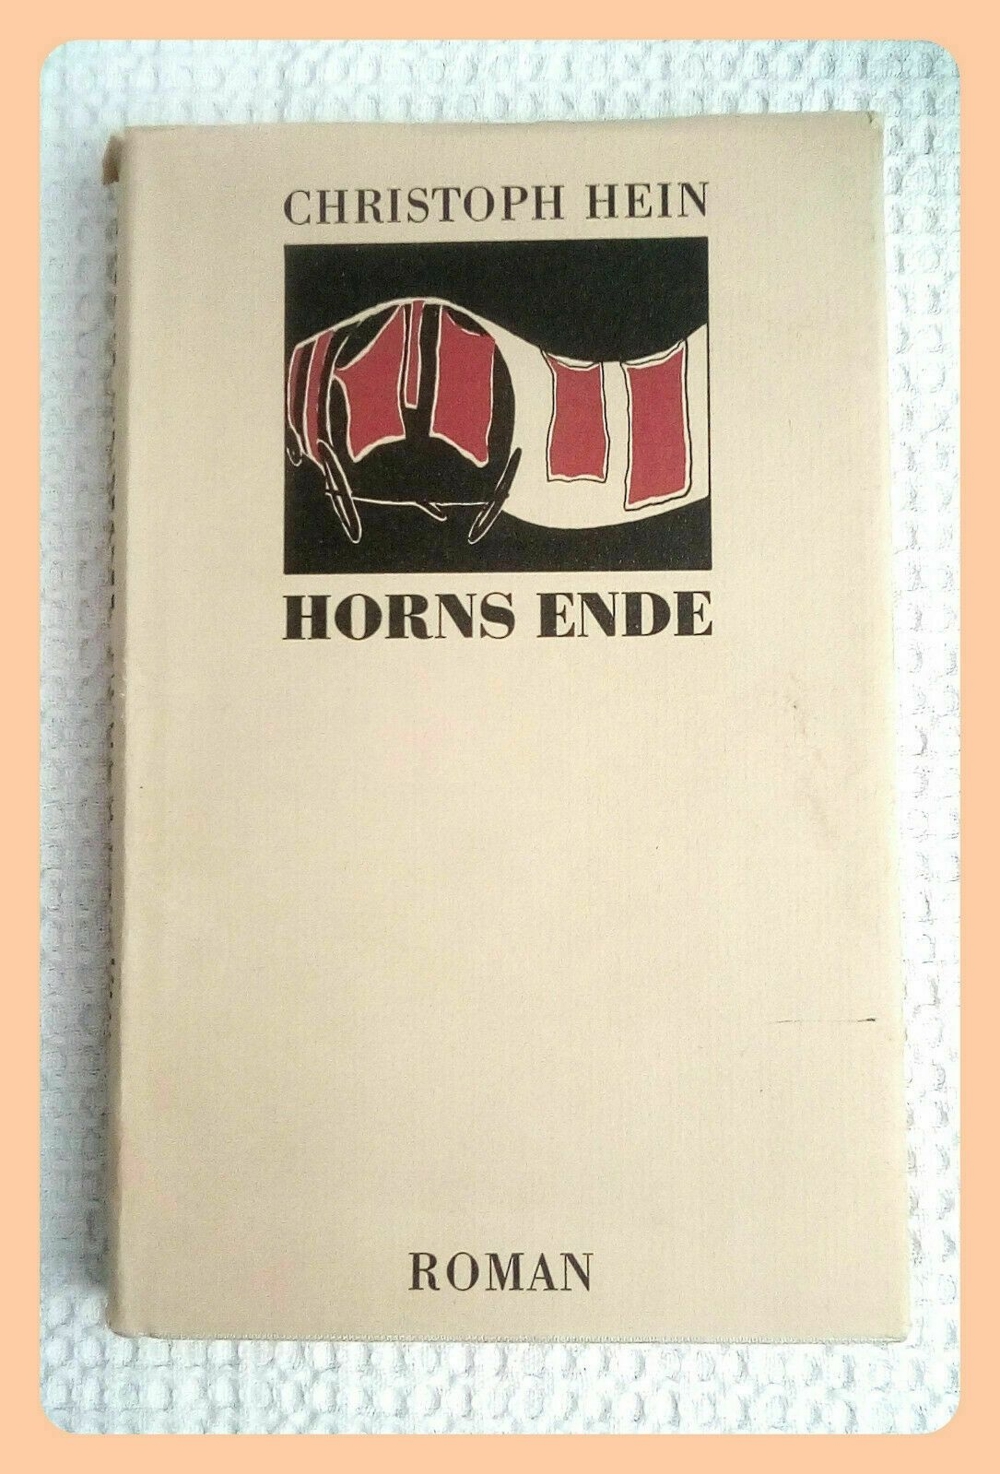 Horns Ende. Christoph Hein.Ein meisterhafter Roman